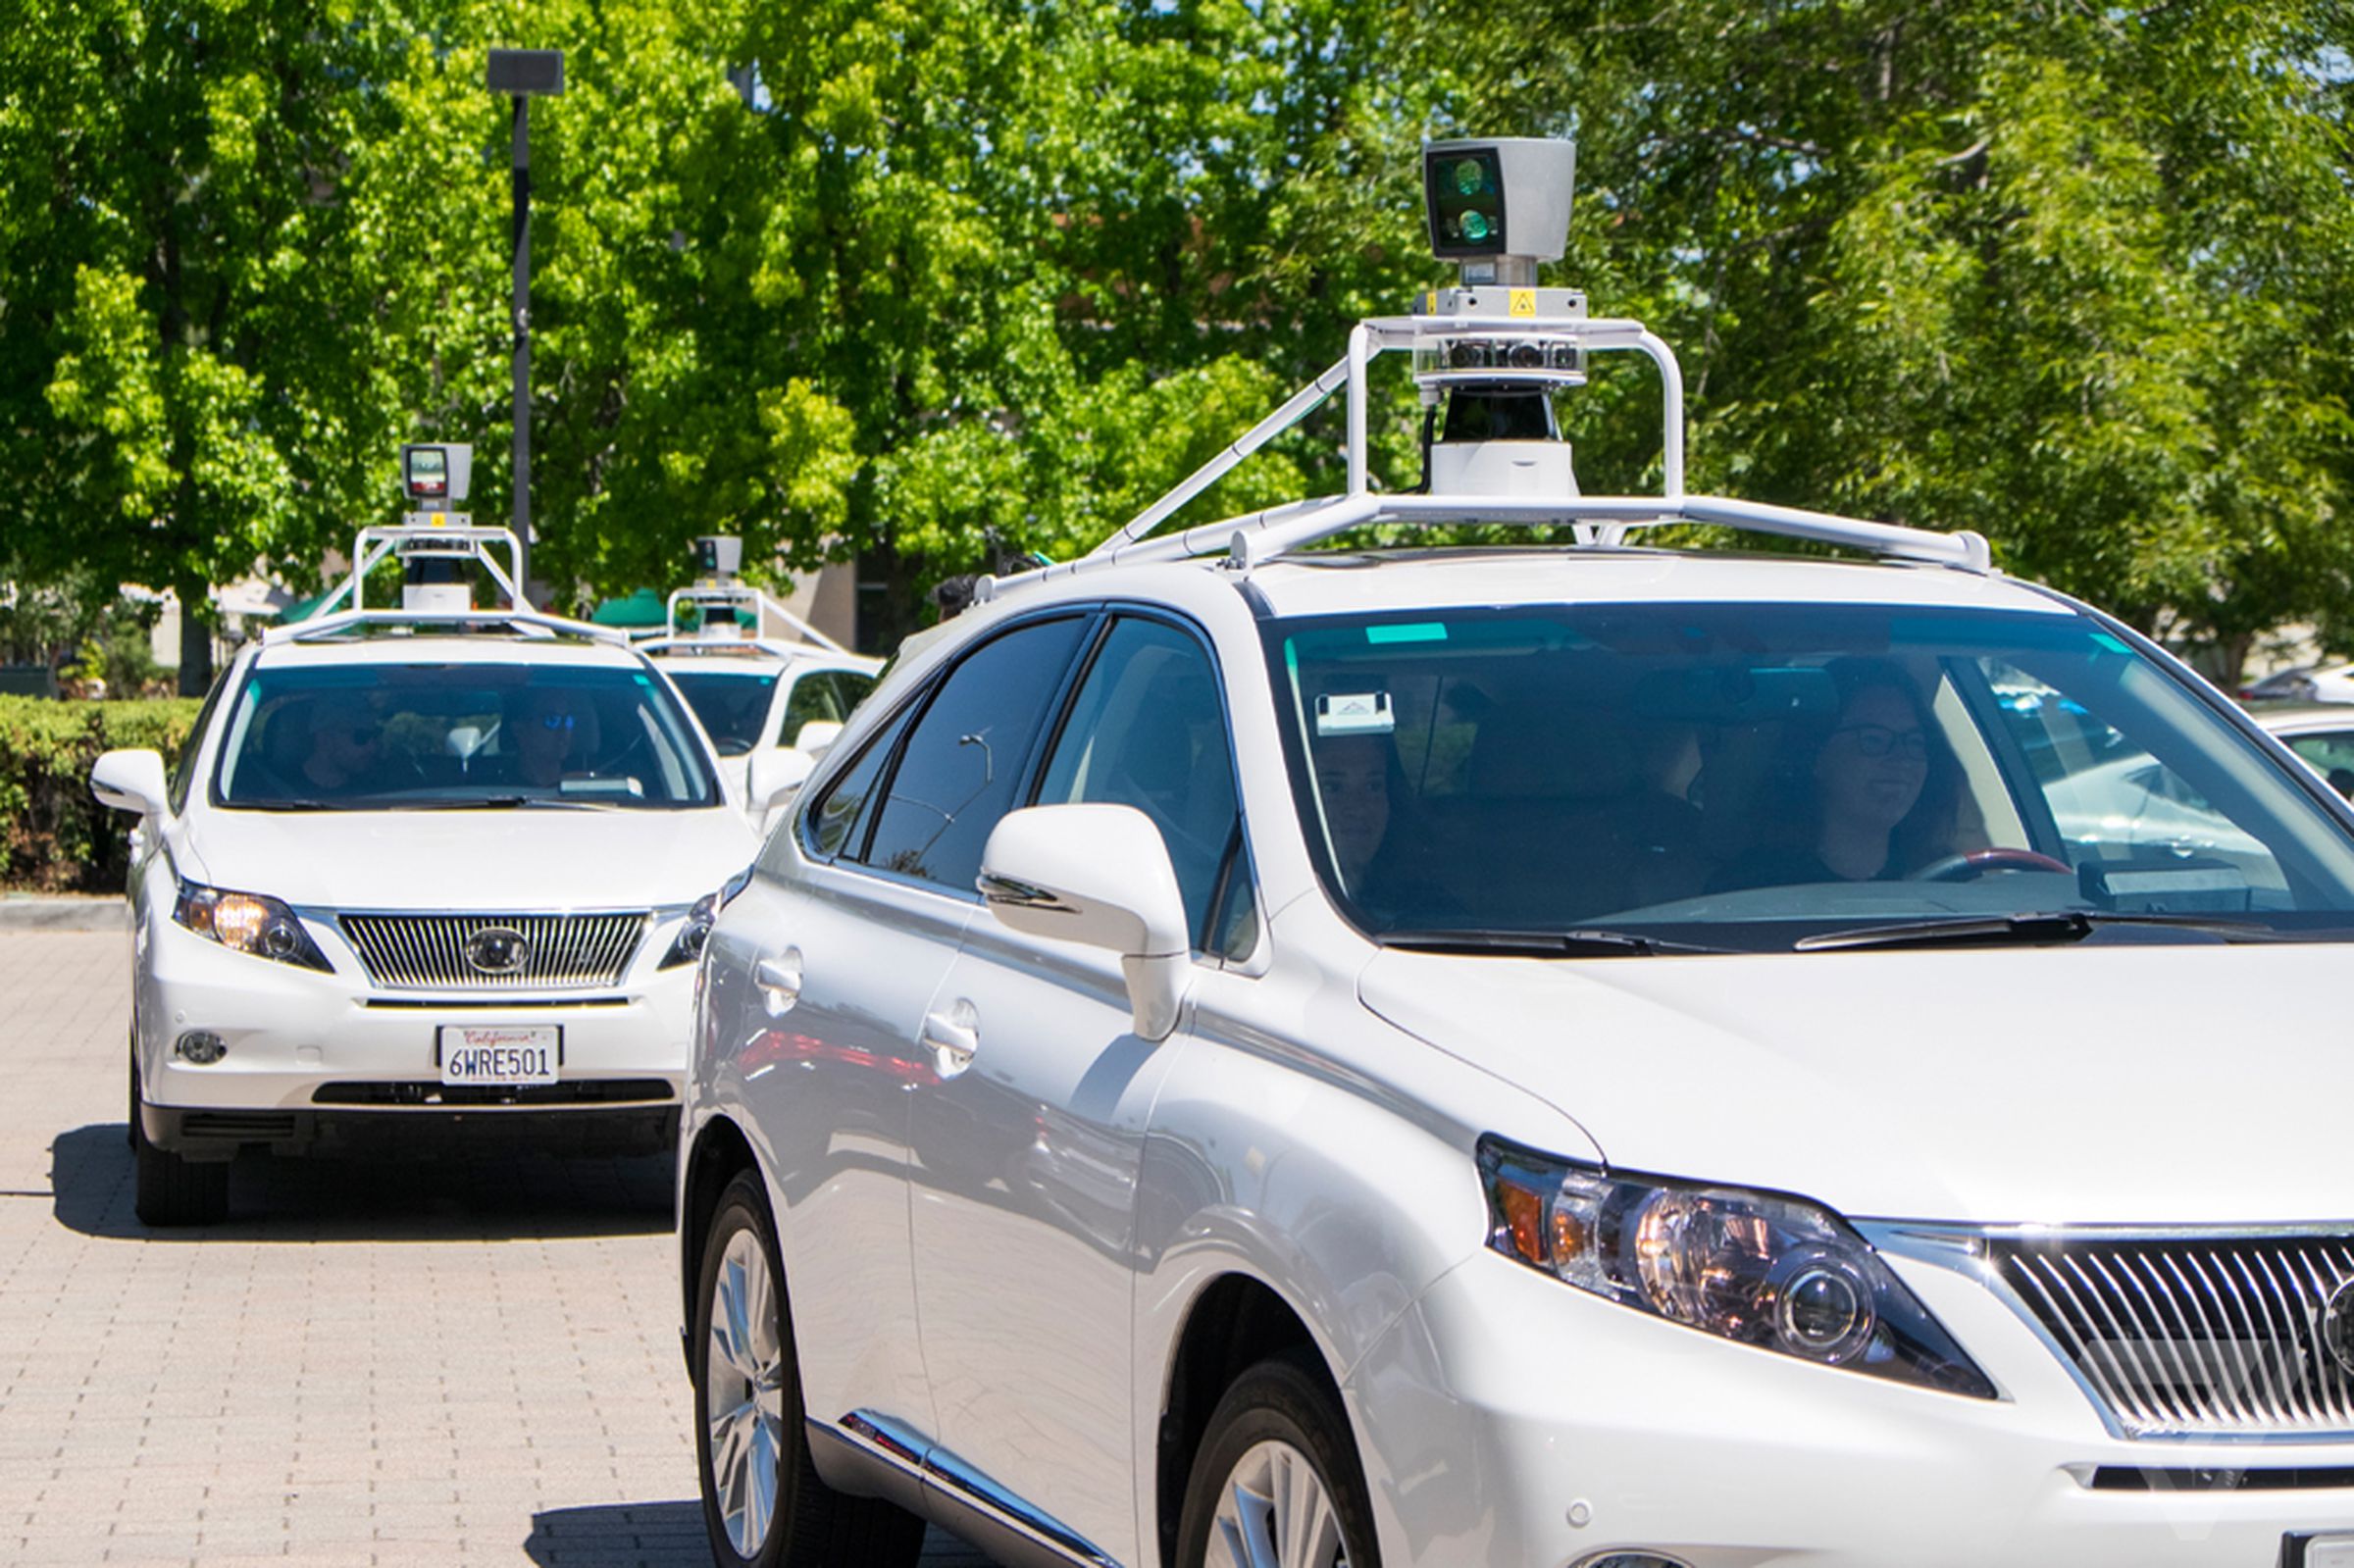 Inside Google's self-driving cars